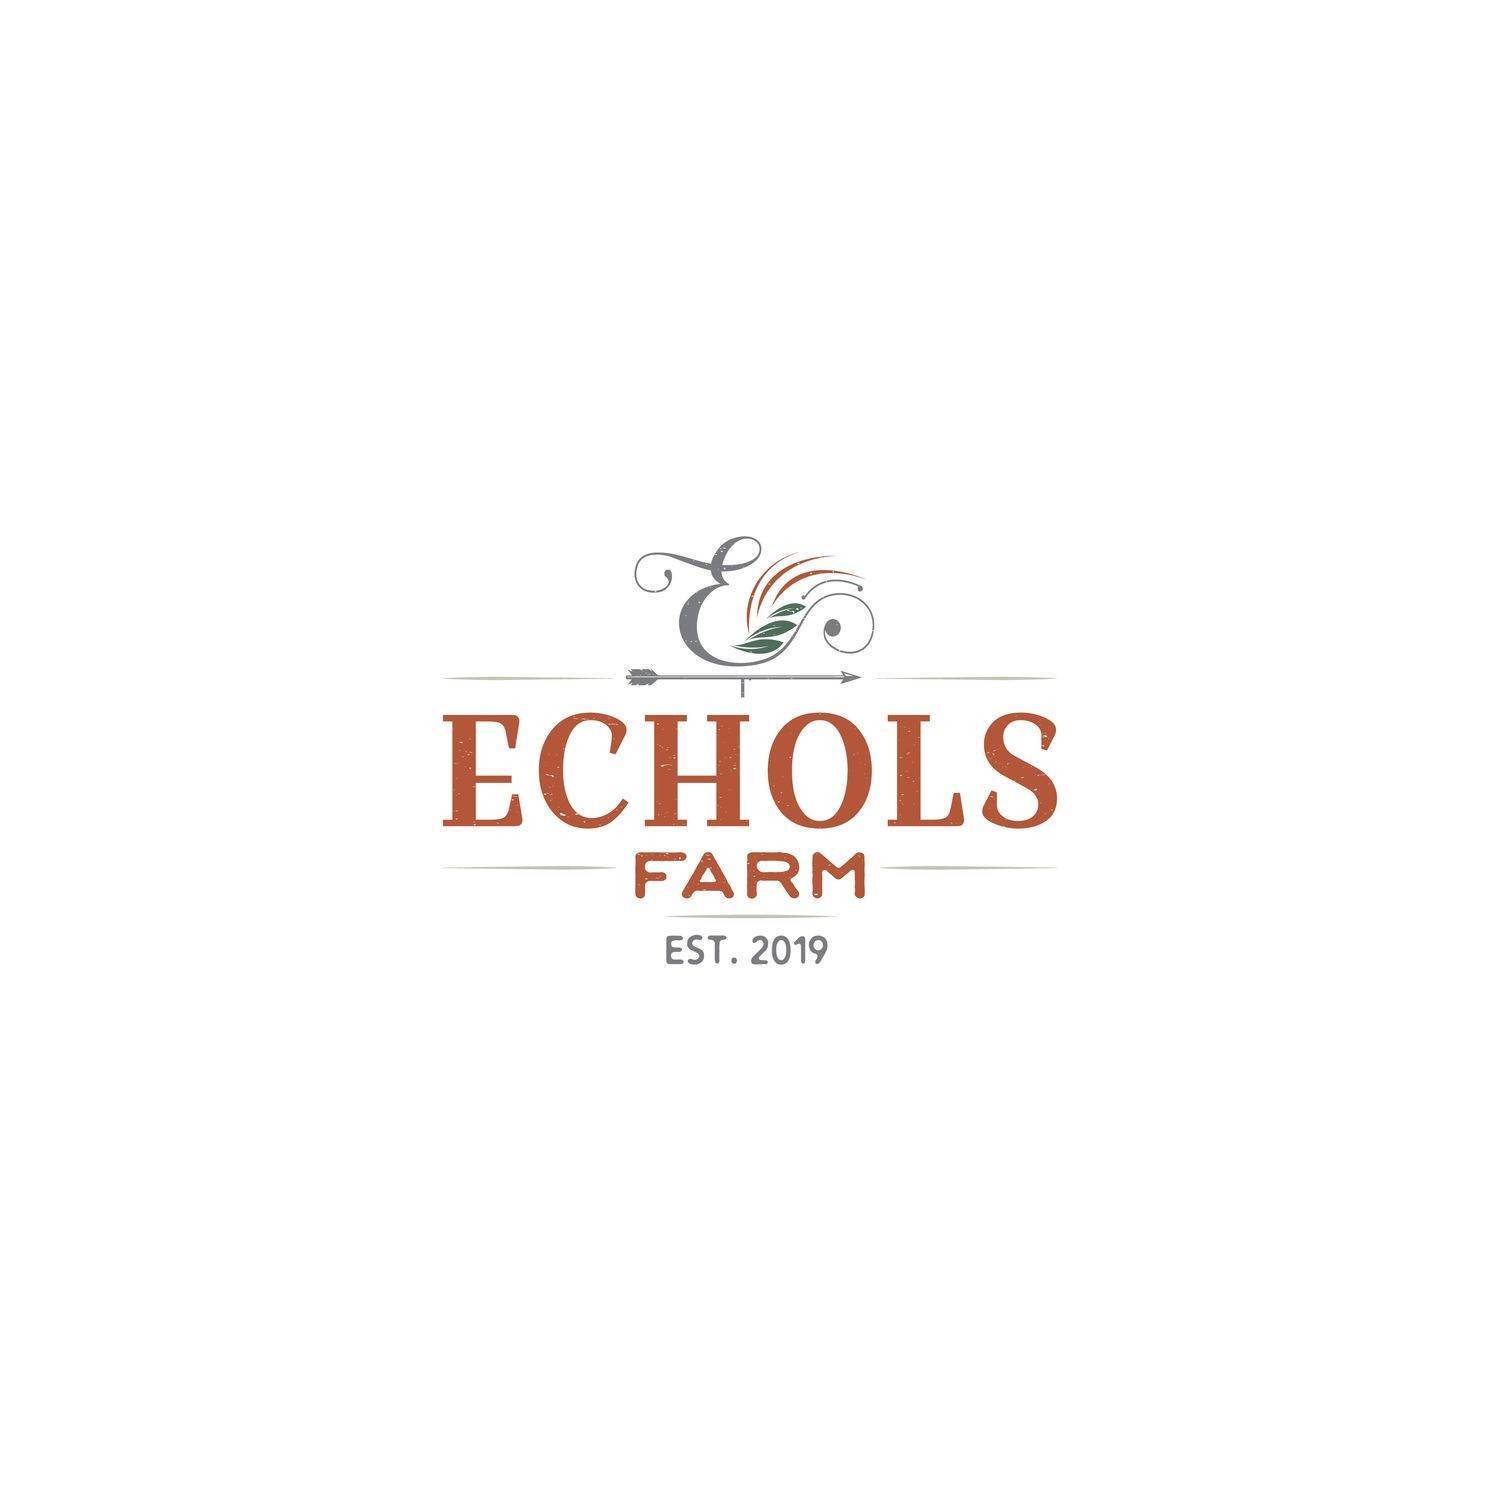 6. Echols Farm建于 4511 Macland Road, Hiram, GA 30141